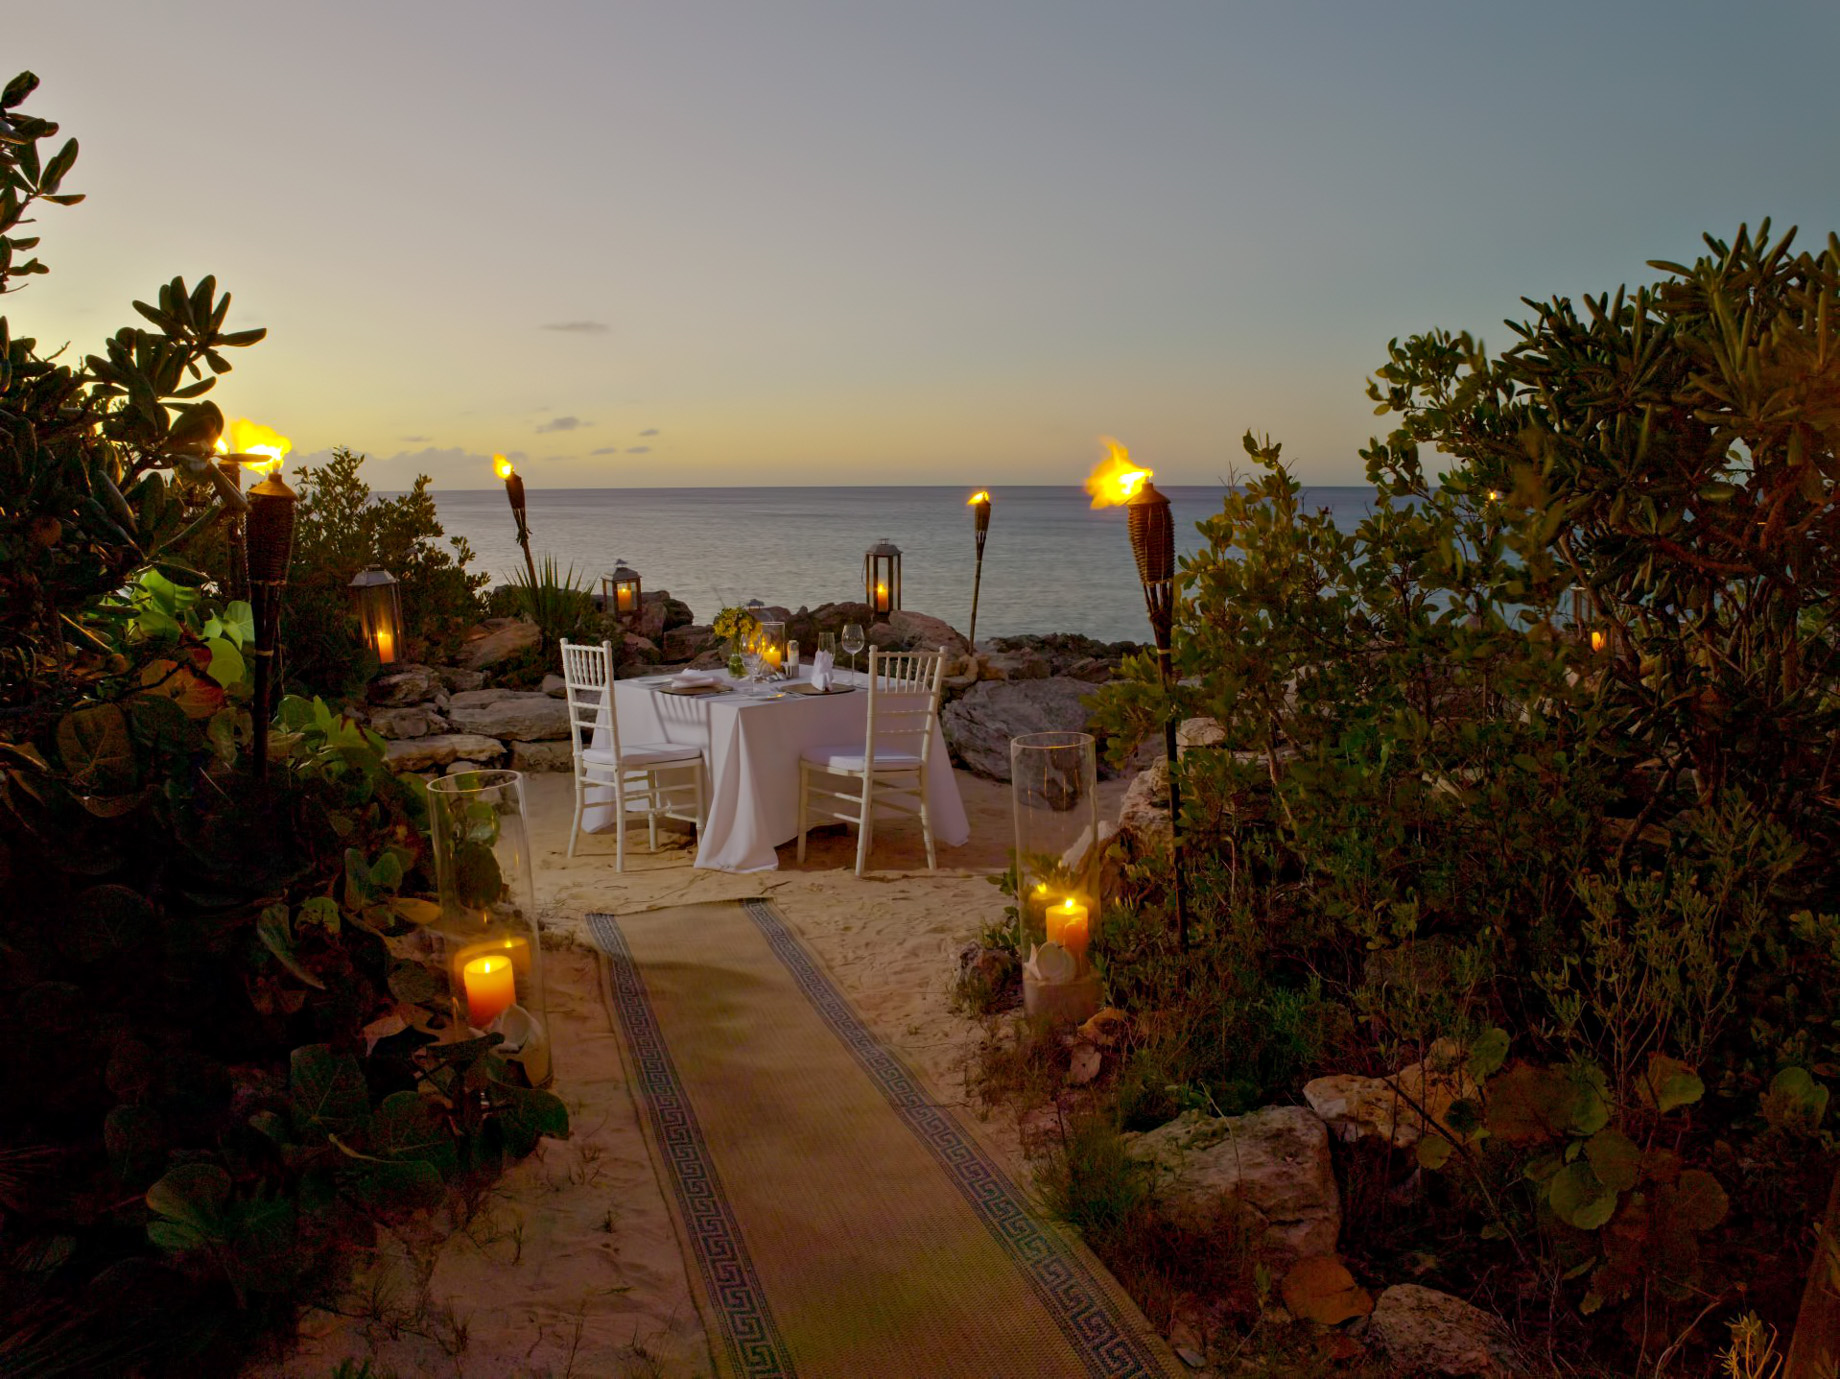 Amanyara Resort - Providenciales, Turks and Caicos Islands - Sunset Beach Dining